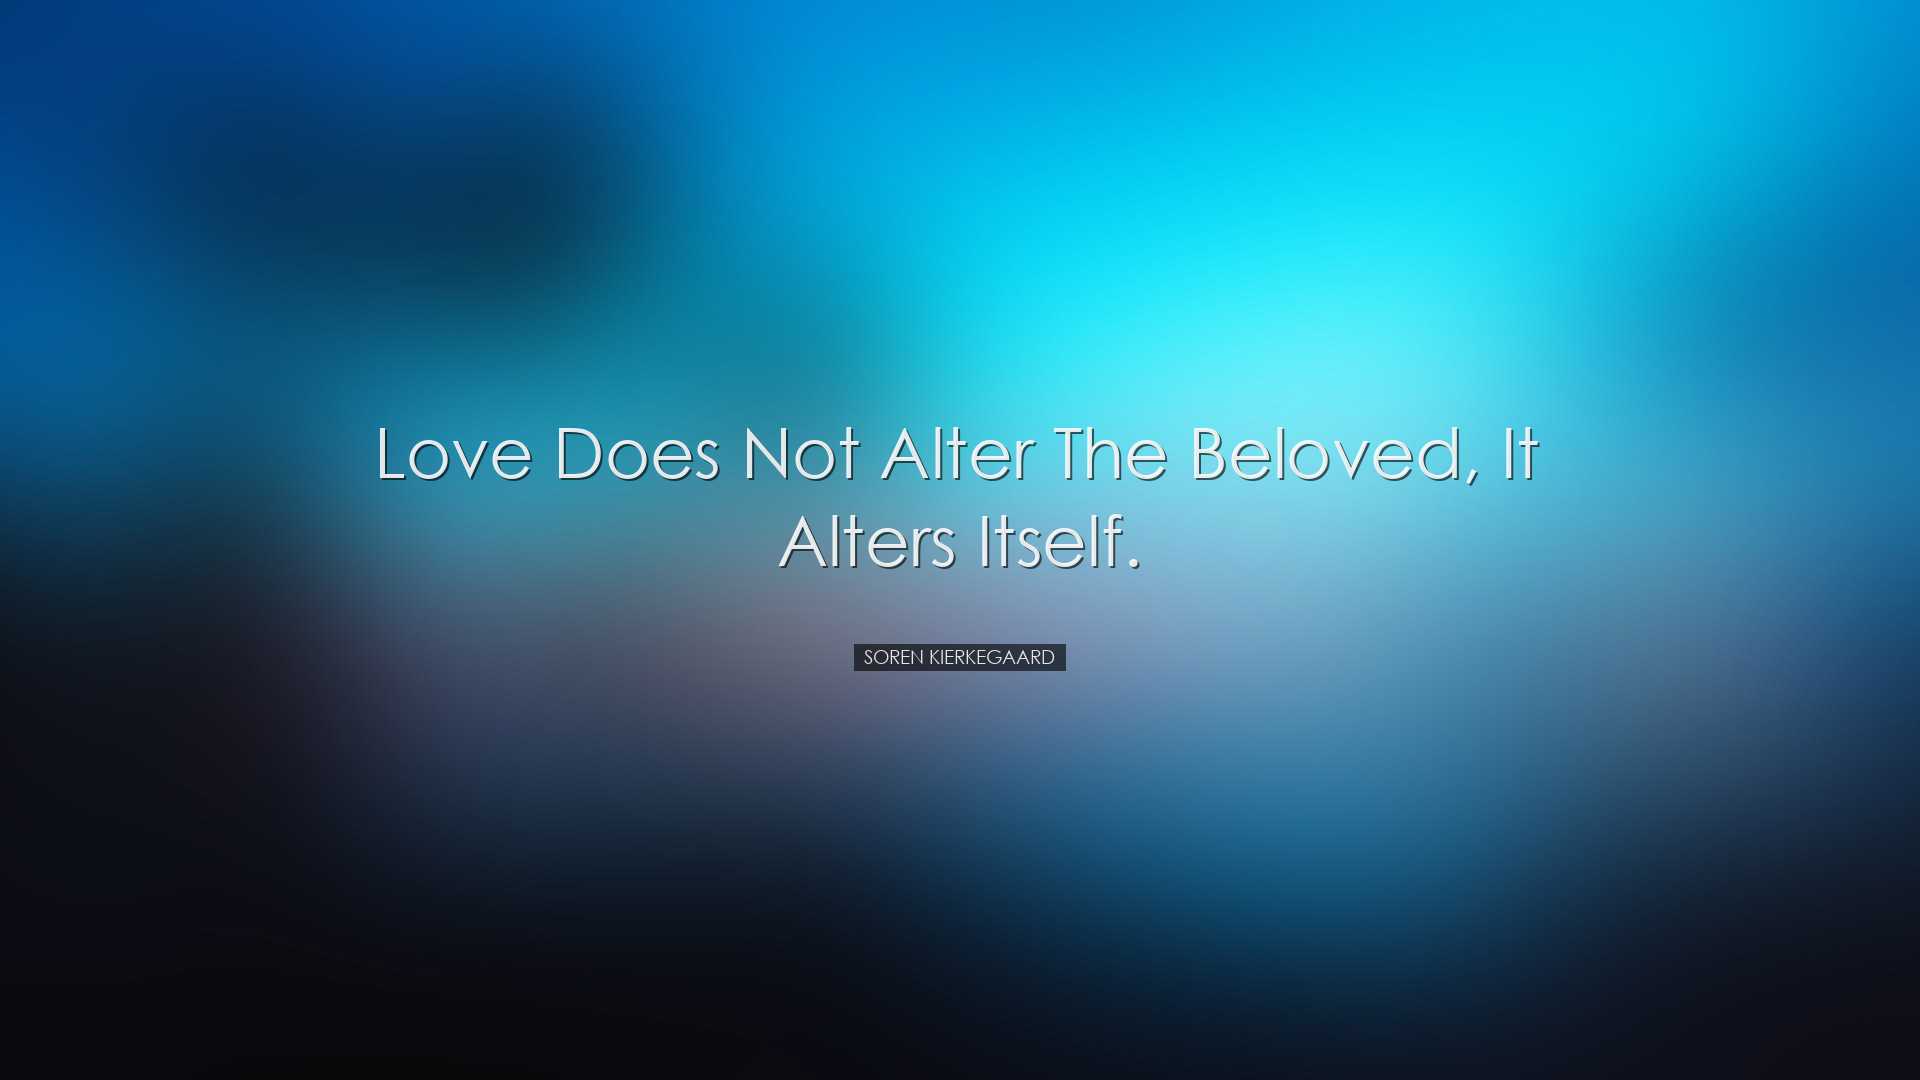 Love does not alter the beloved, it alters itself. - Soren Kierkeg